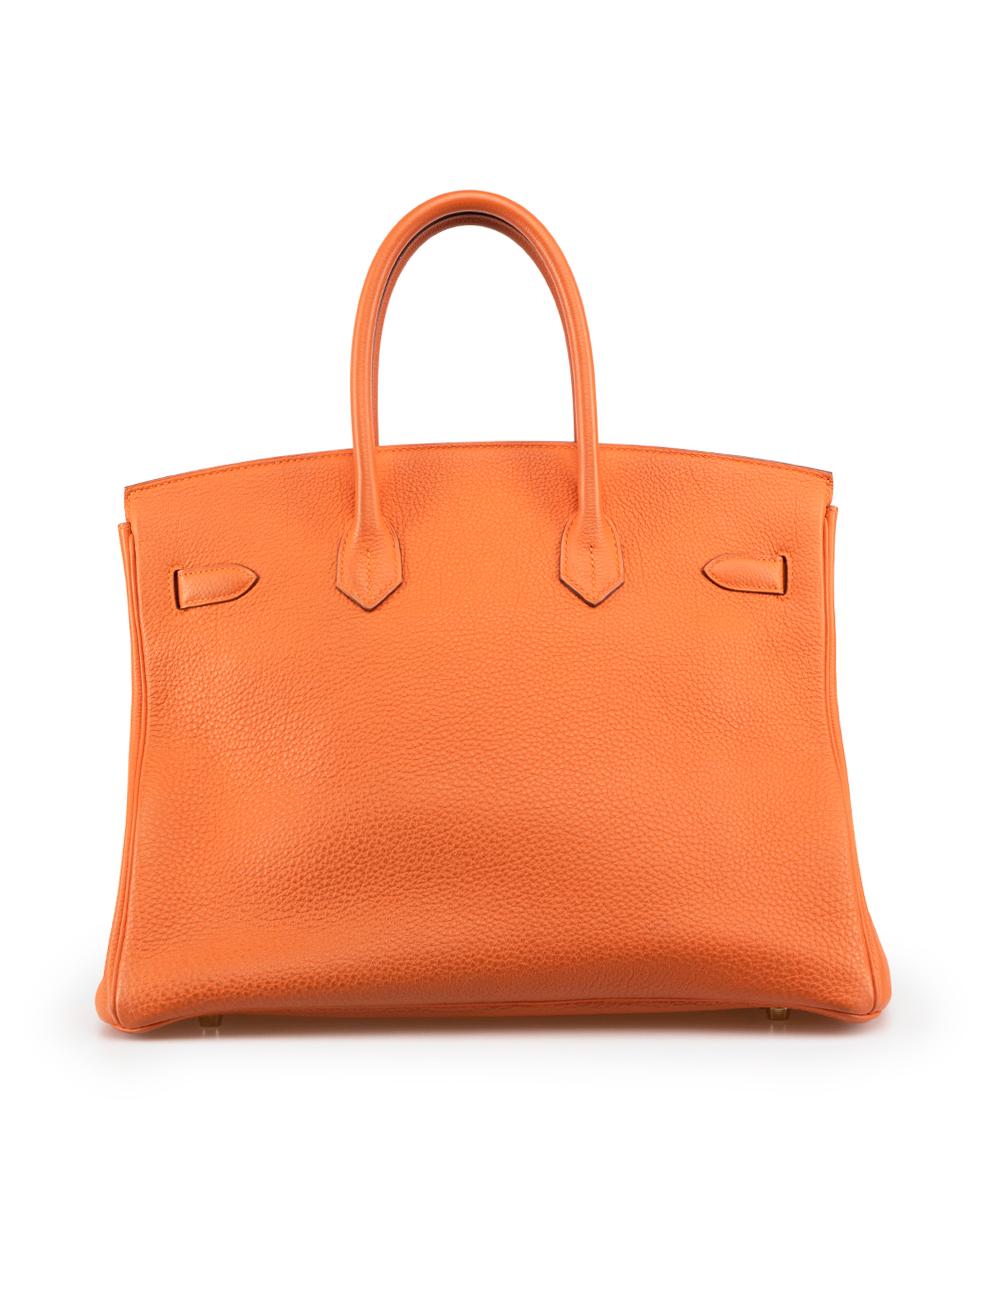 Hermès 2014 Orange Veau Togo Leather GHW Birkin 35 In Good Condition For Sale In London, GB